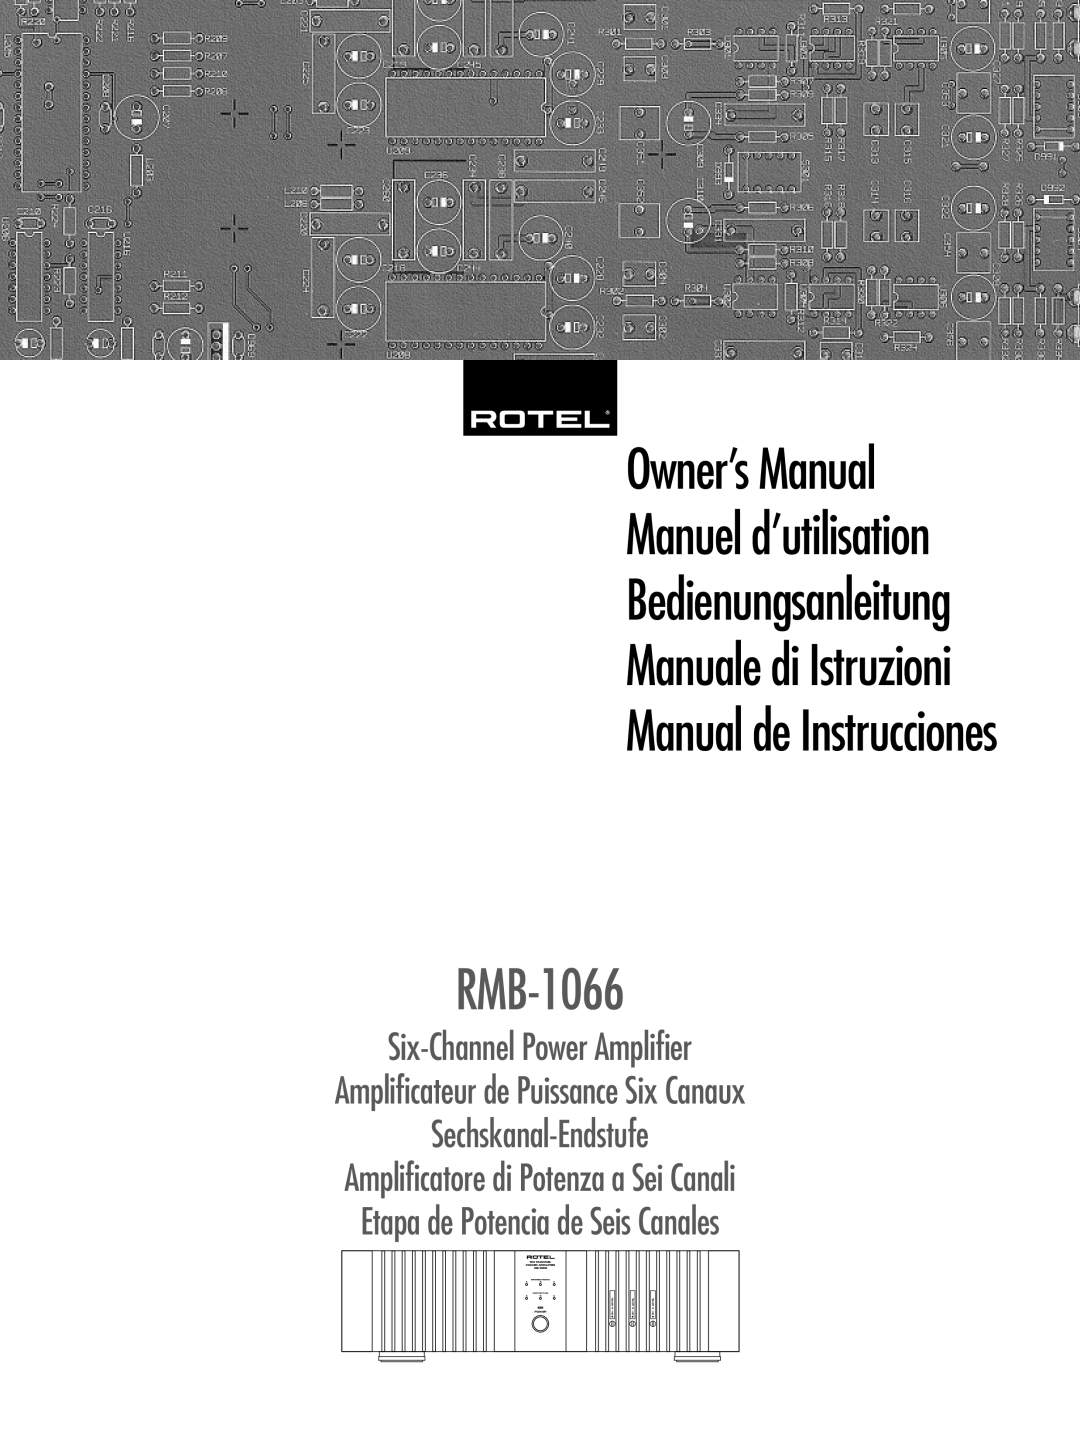 Rotel RB-1066 owner manual Manual de Instrucciones, RMB-1066, Manuale di Istruzioni, Bedienungsanleitung, Power 